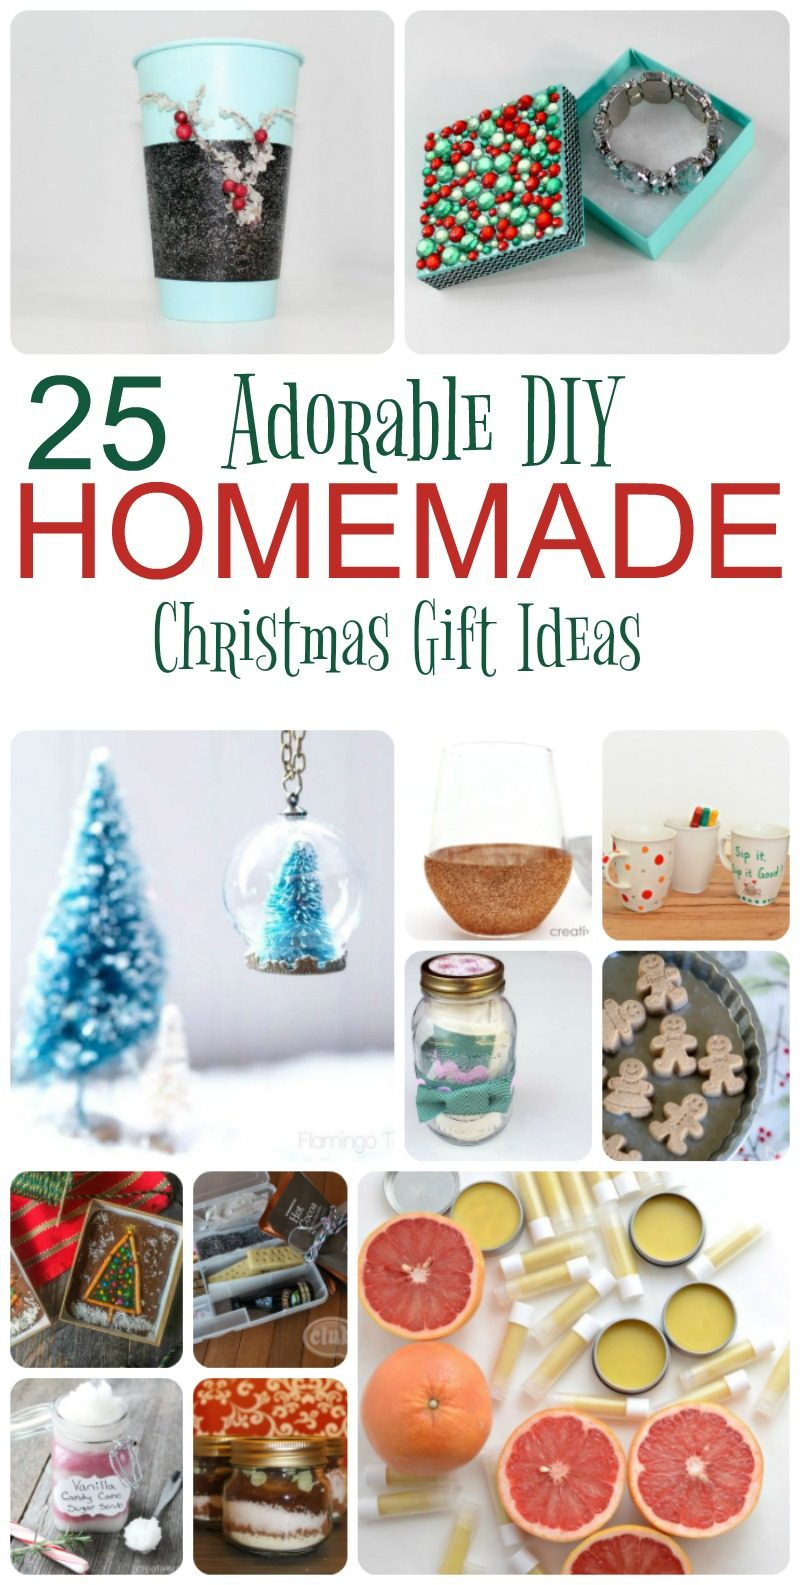 DIY Christmas Present Ideas
 25 Adorable Homemade Gifts to Make for Christmas Pretty